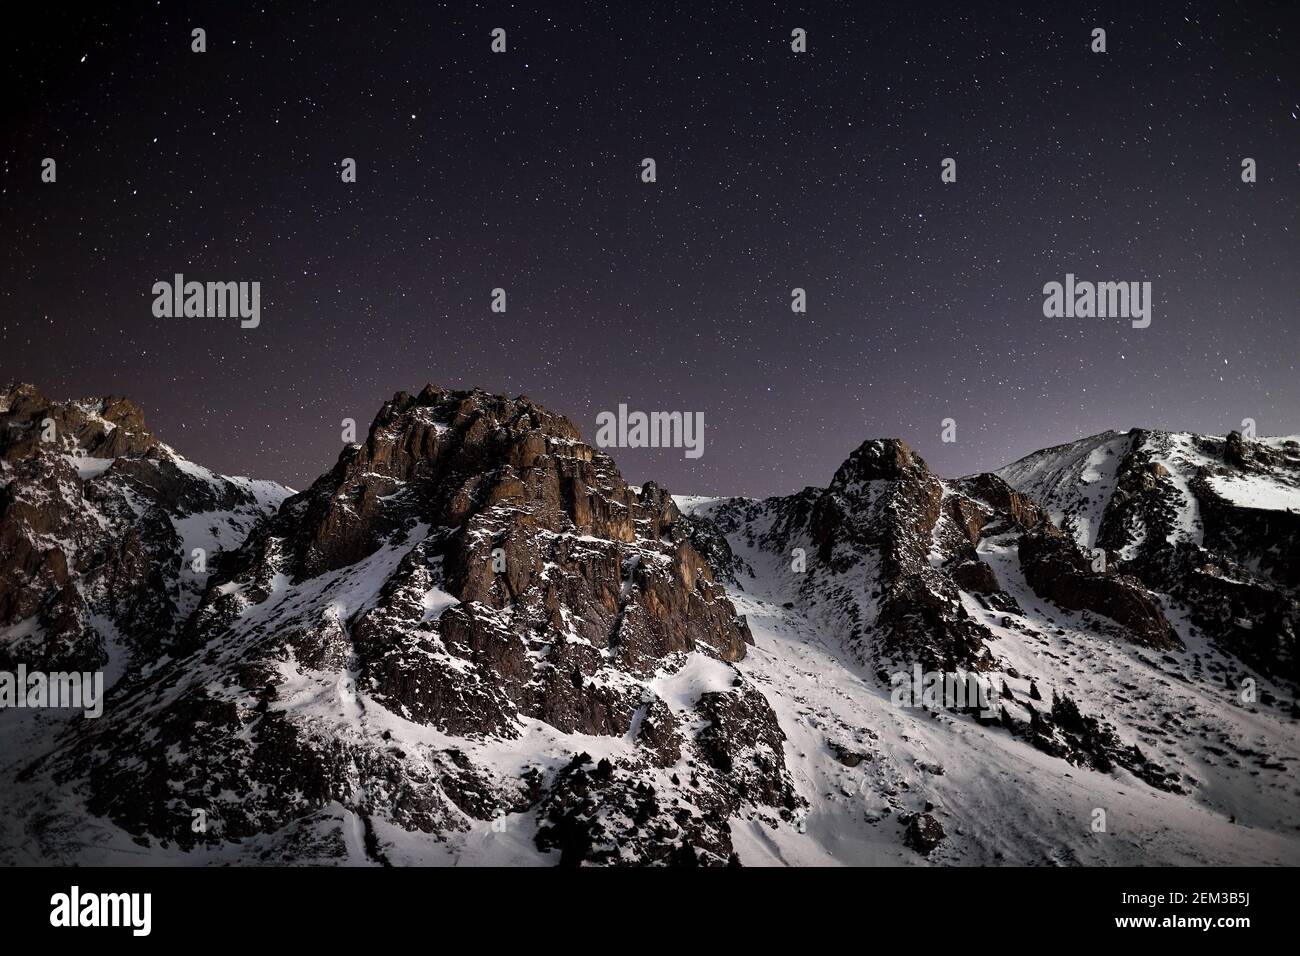 Dramatic landscape of mountain range at night sky with stars near Almaty, Kazakhstan Stock Photo